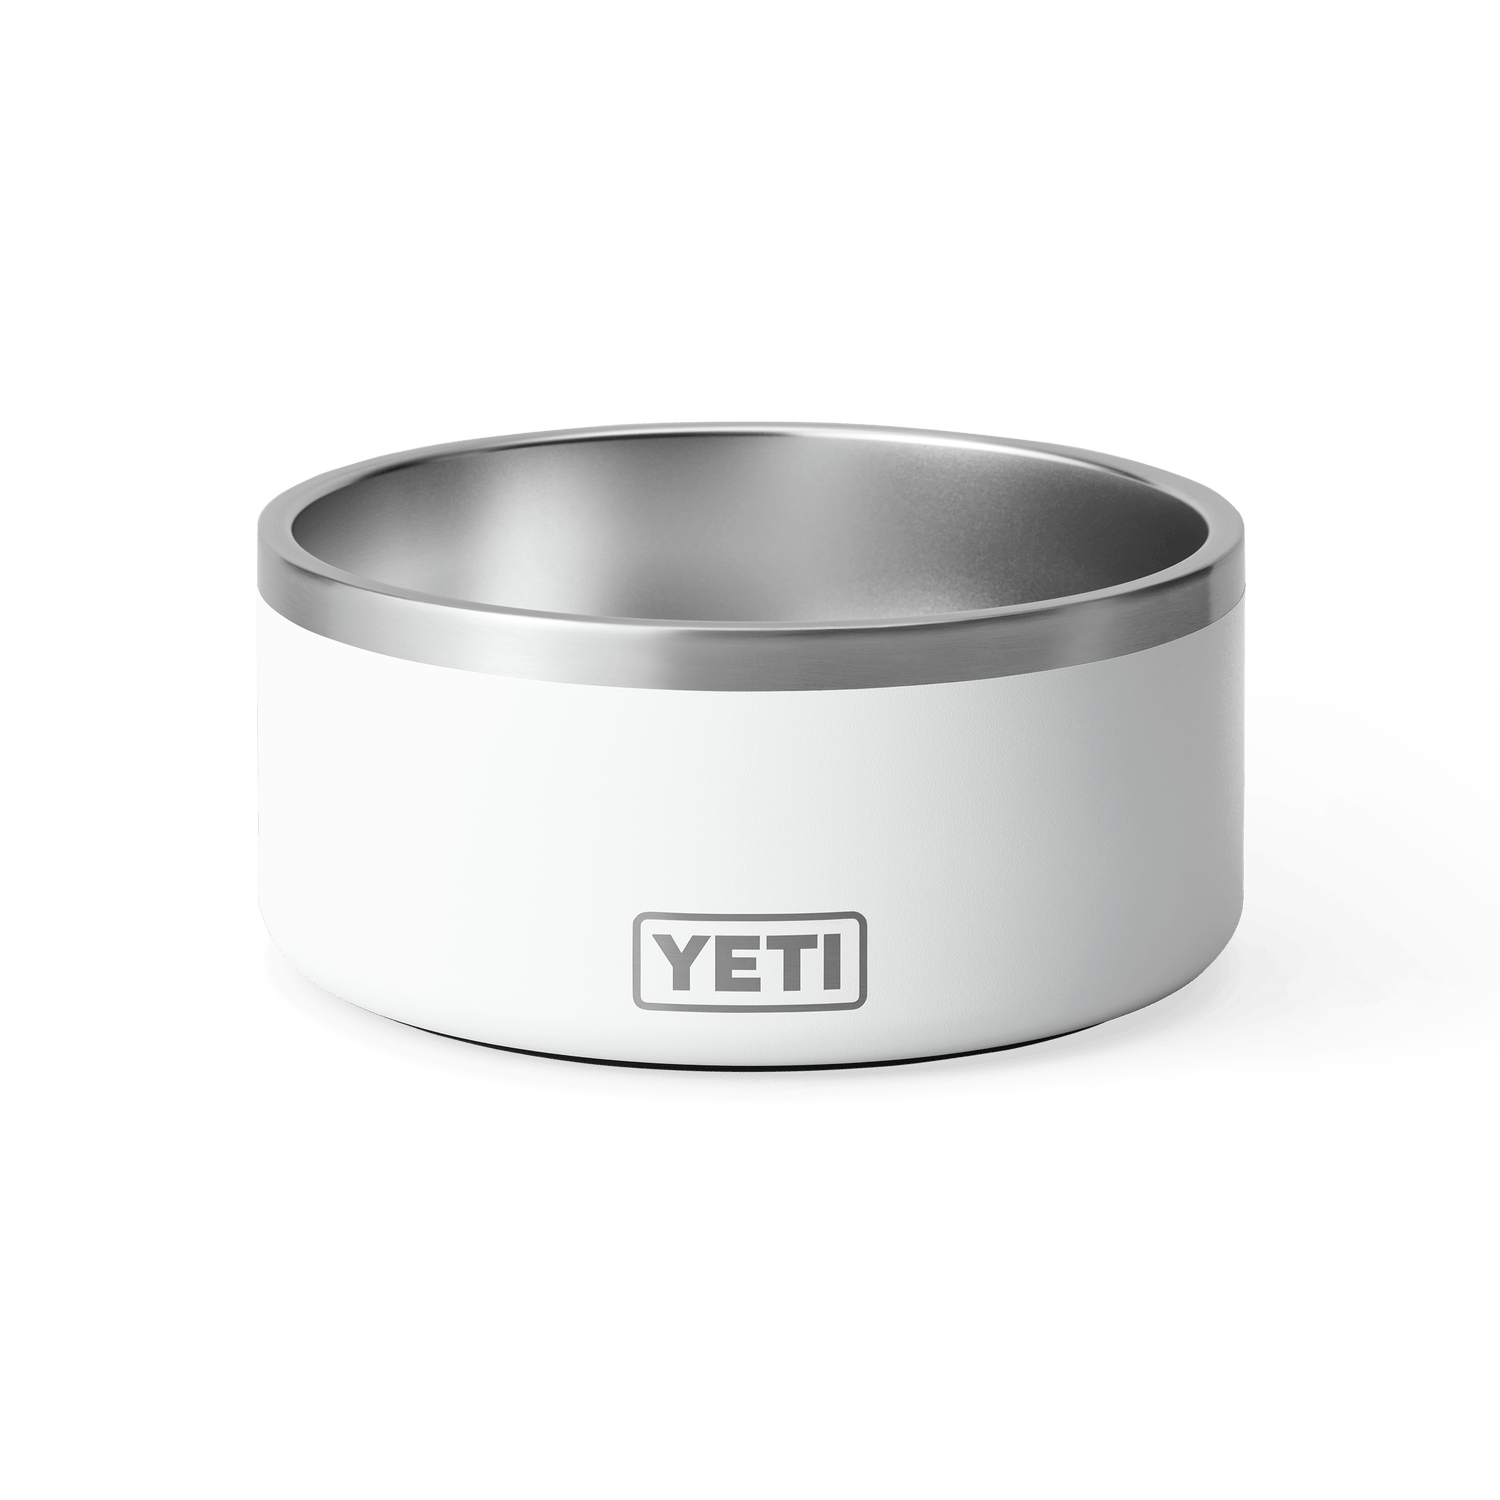 Yeti VS Hydrapeak Dog Bowl Comparison Boomer 8 